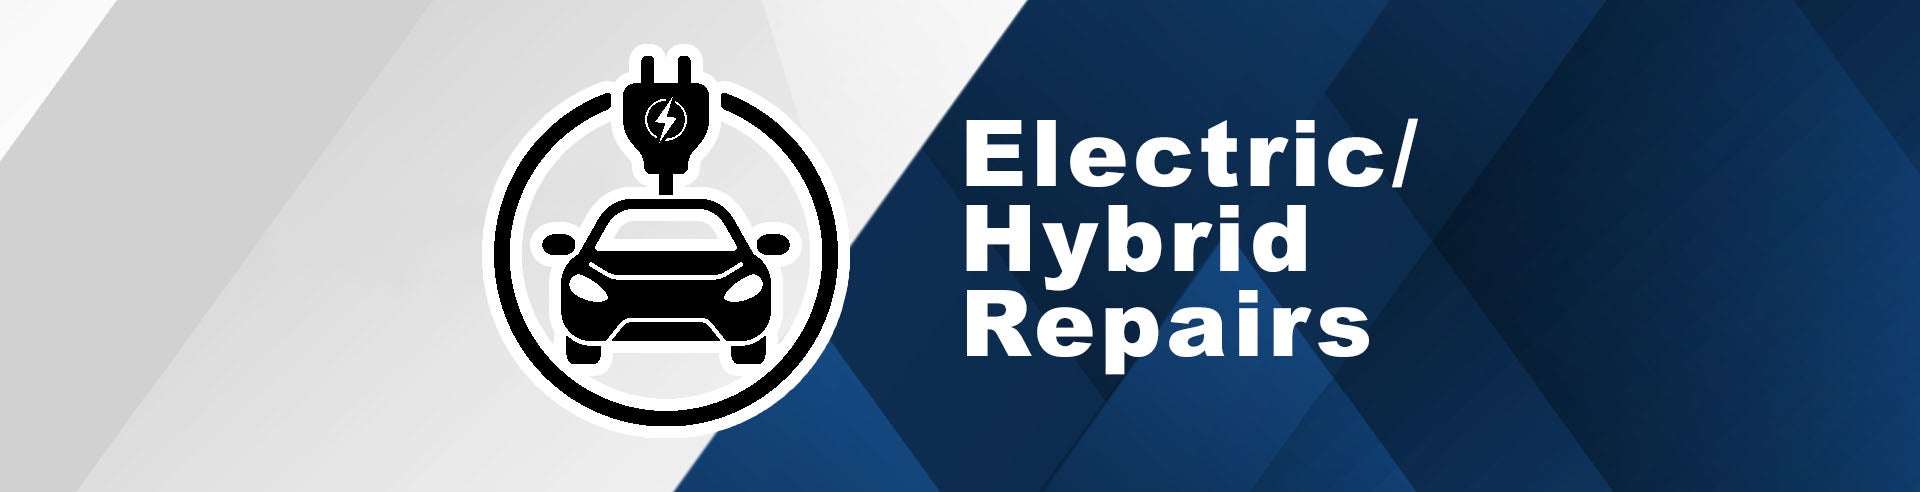 EV Electric & Hybrid Vehicle Repair & Maintenance